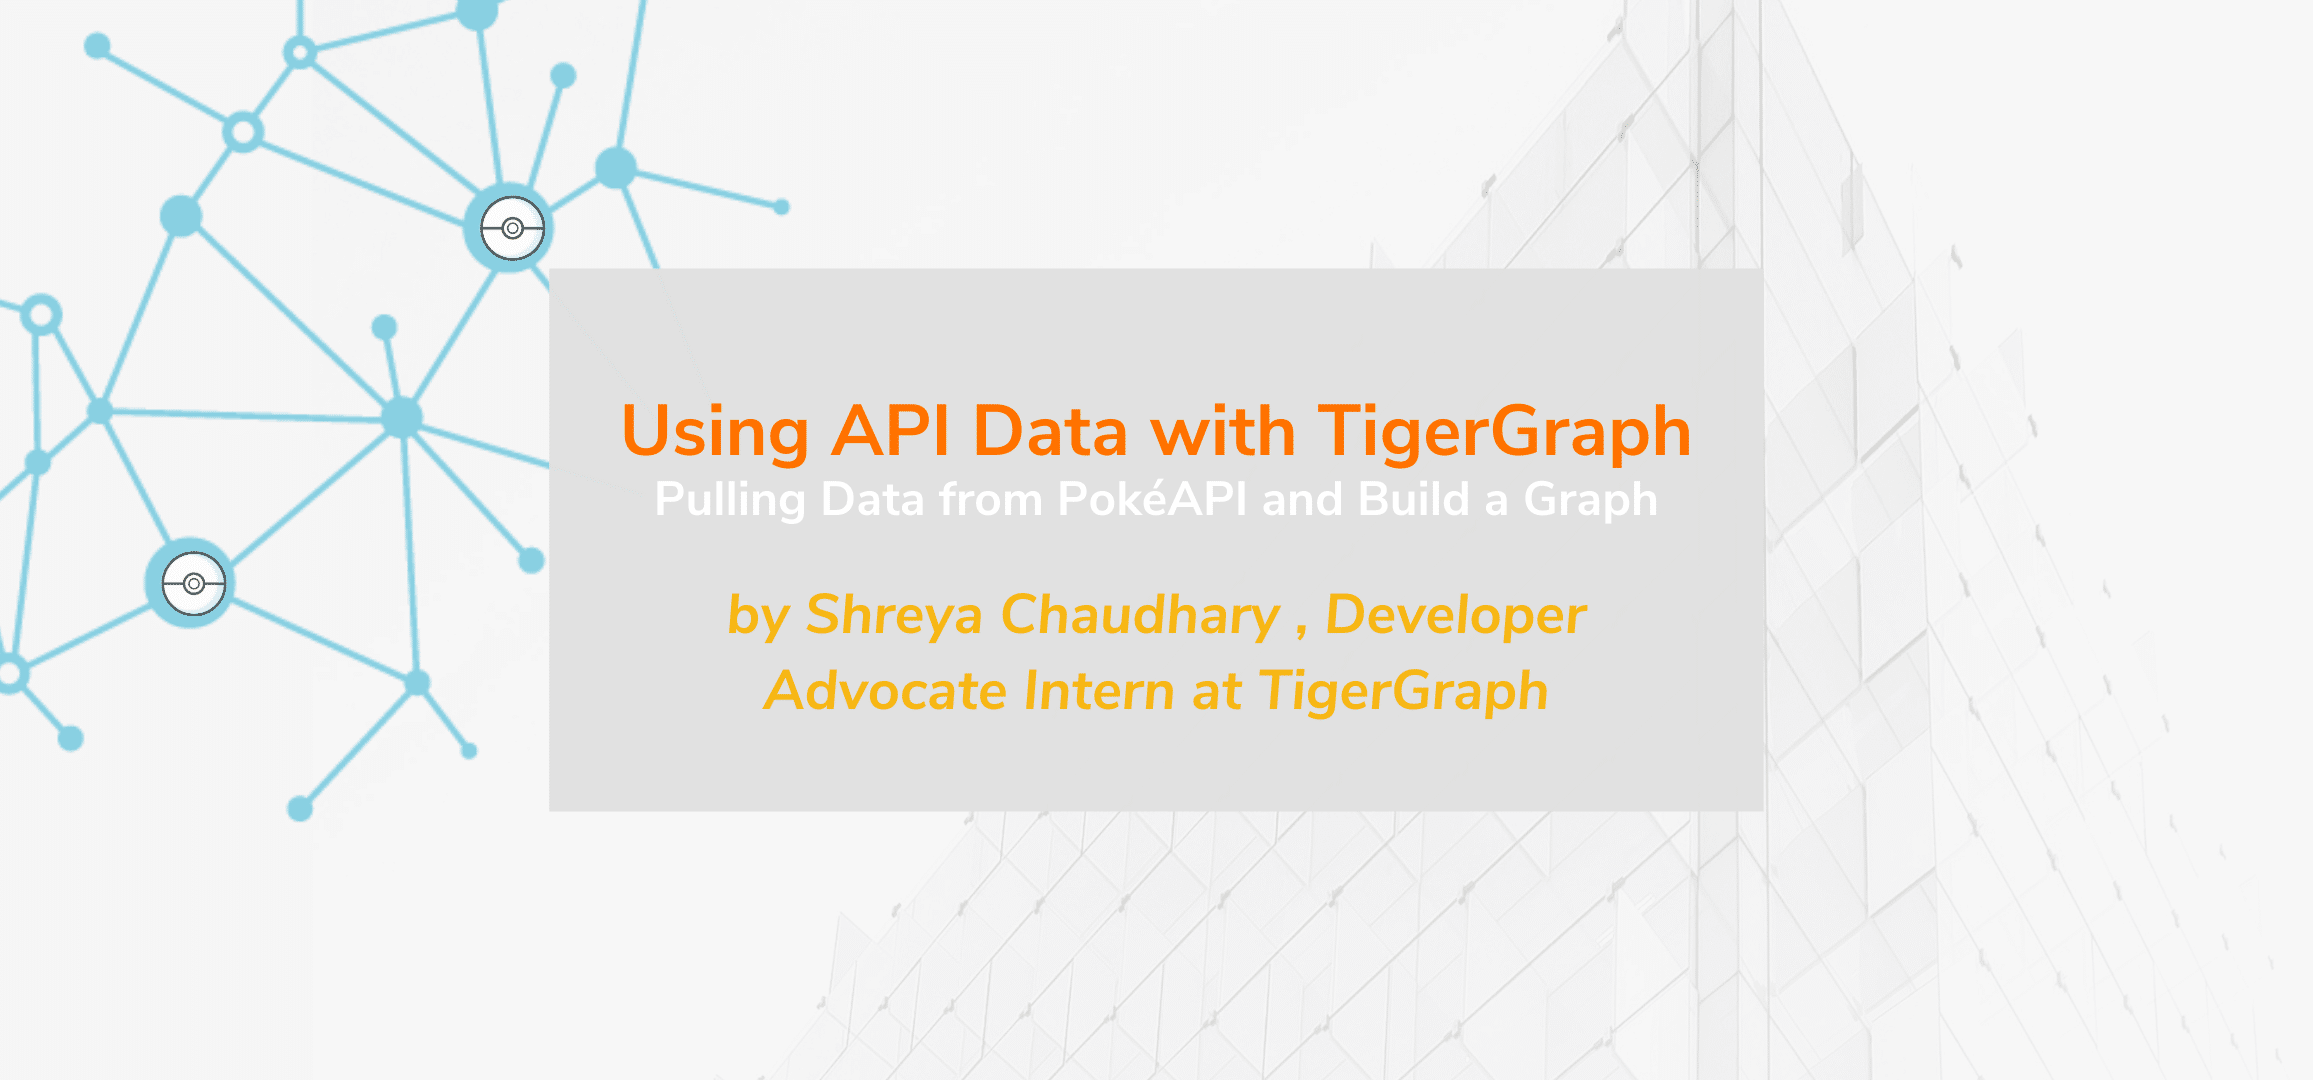 API Data with TigerGraph